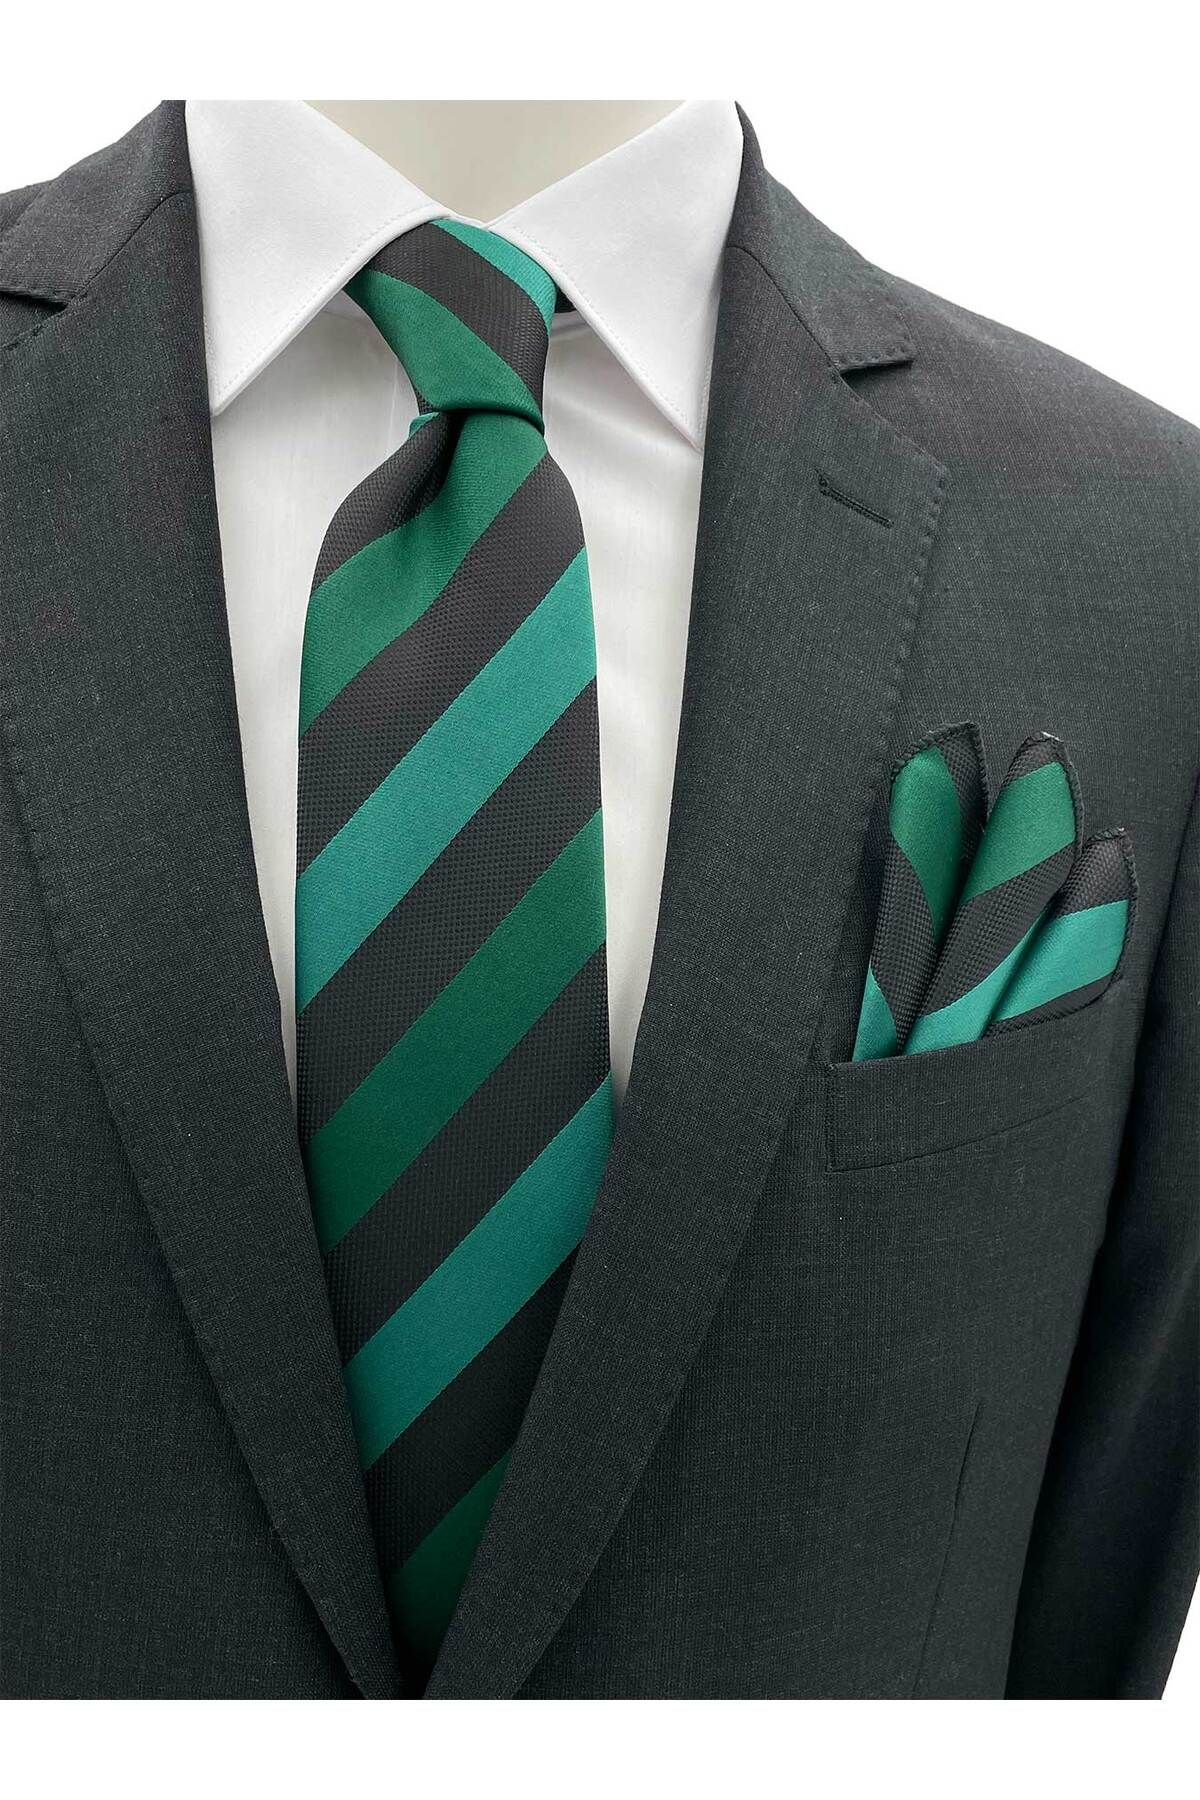 Brianze Yeşil Siyah Çizgili Kravat Mendil Set